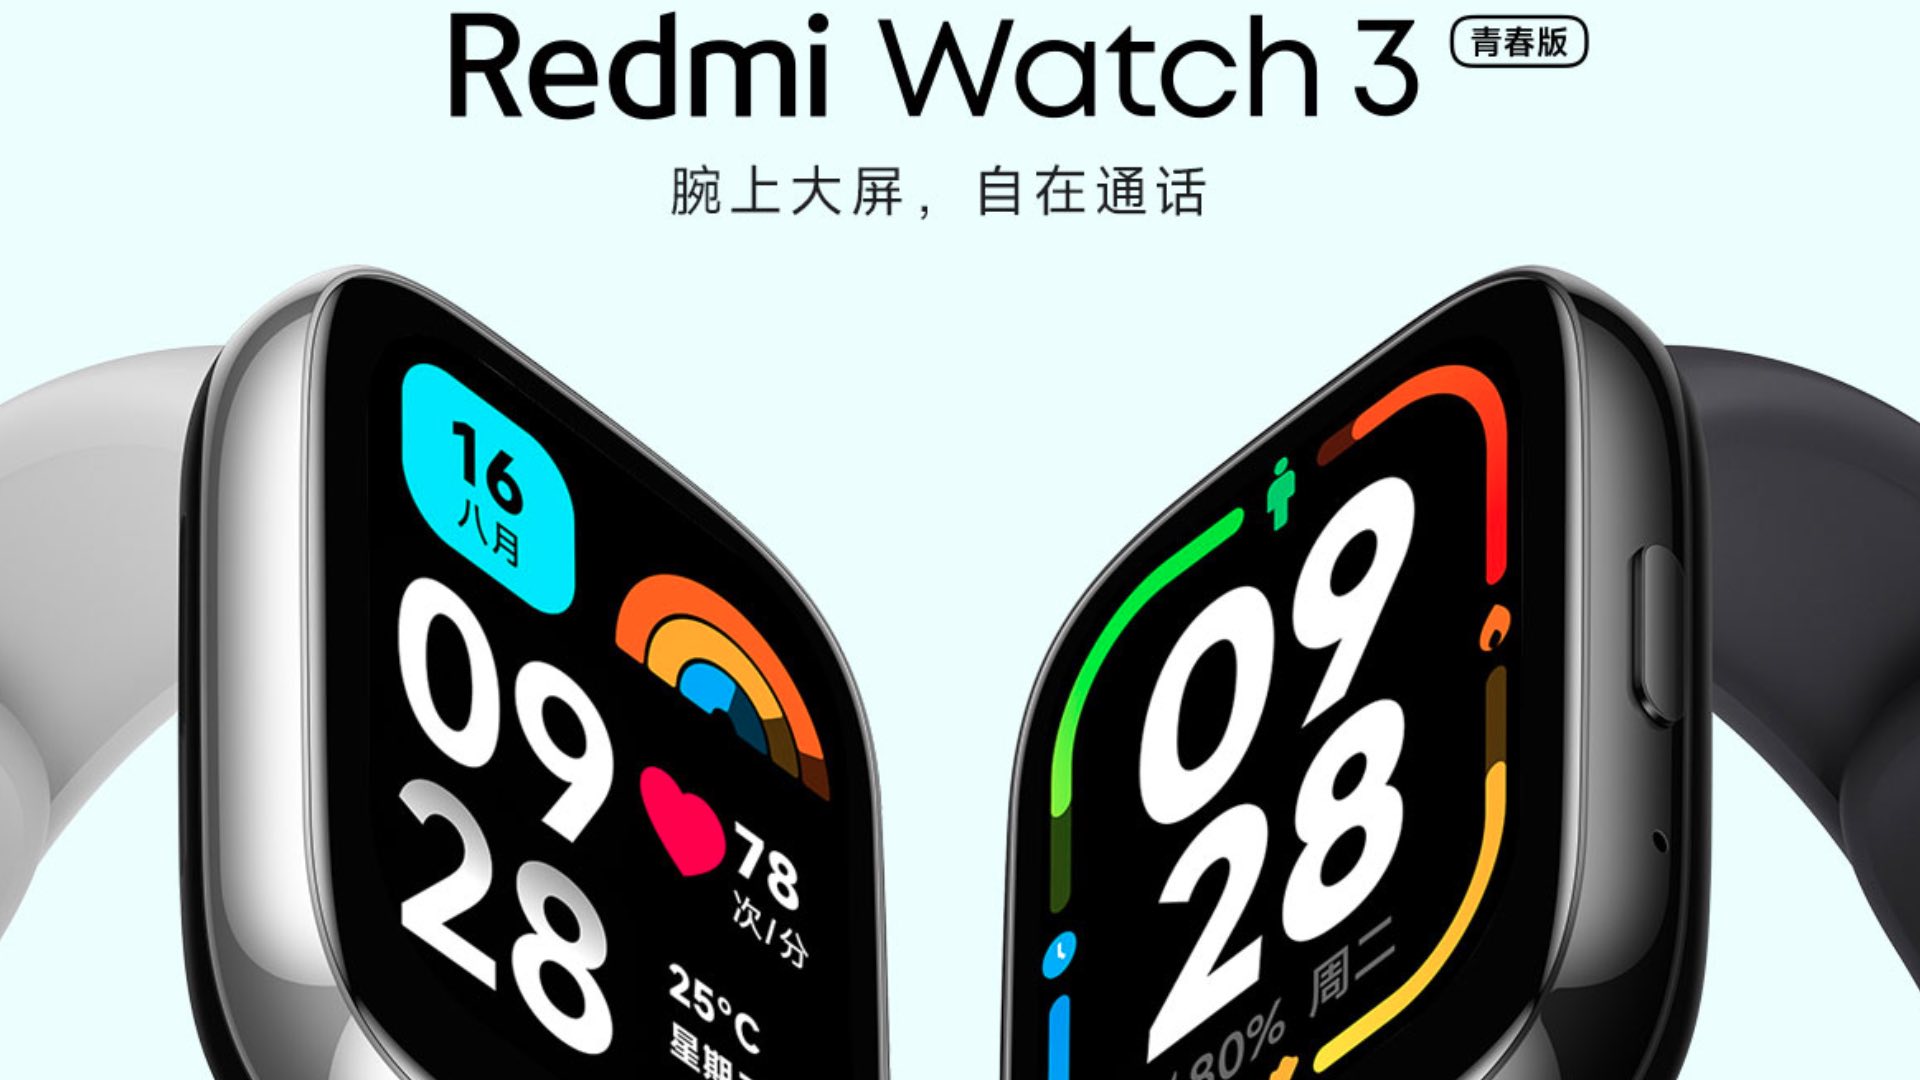 Redmi watch 3. Циферблат для Эппл вотч 3 пицца. Redmi watch 3 Размеры. Redmi watch 3 характеристики можно ли мочить?. Redmi watch 3 установить